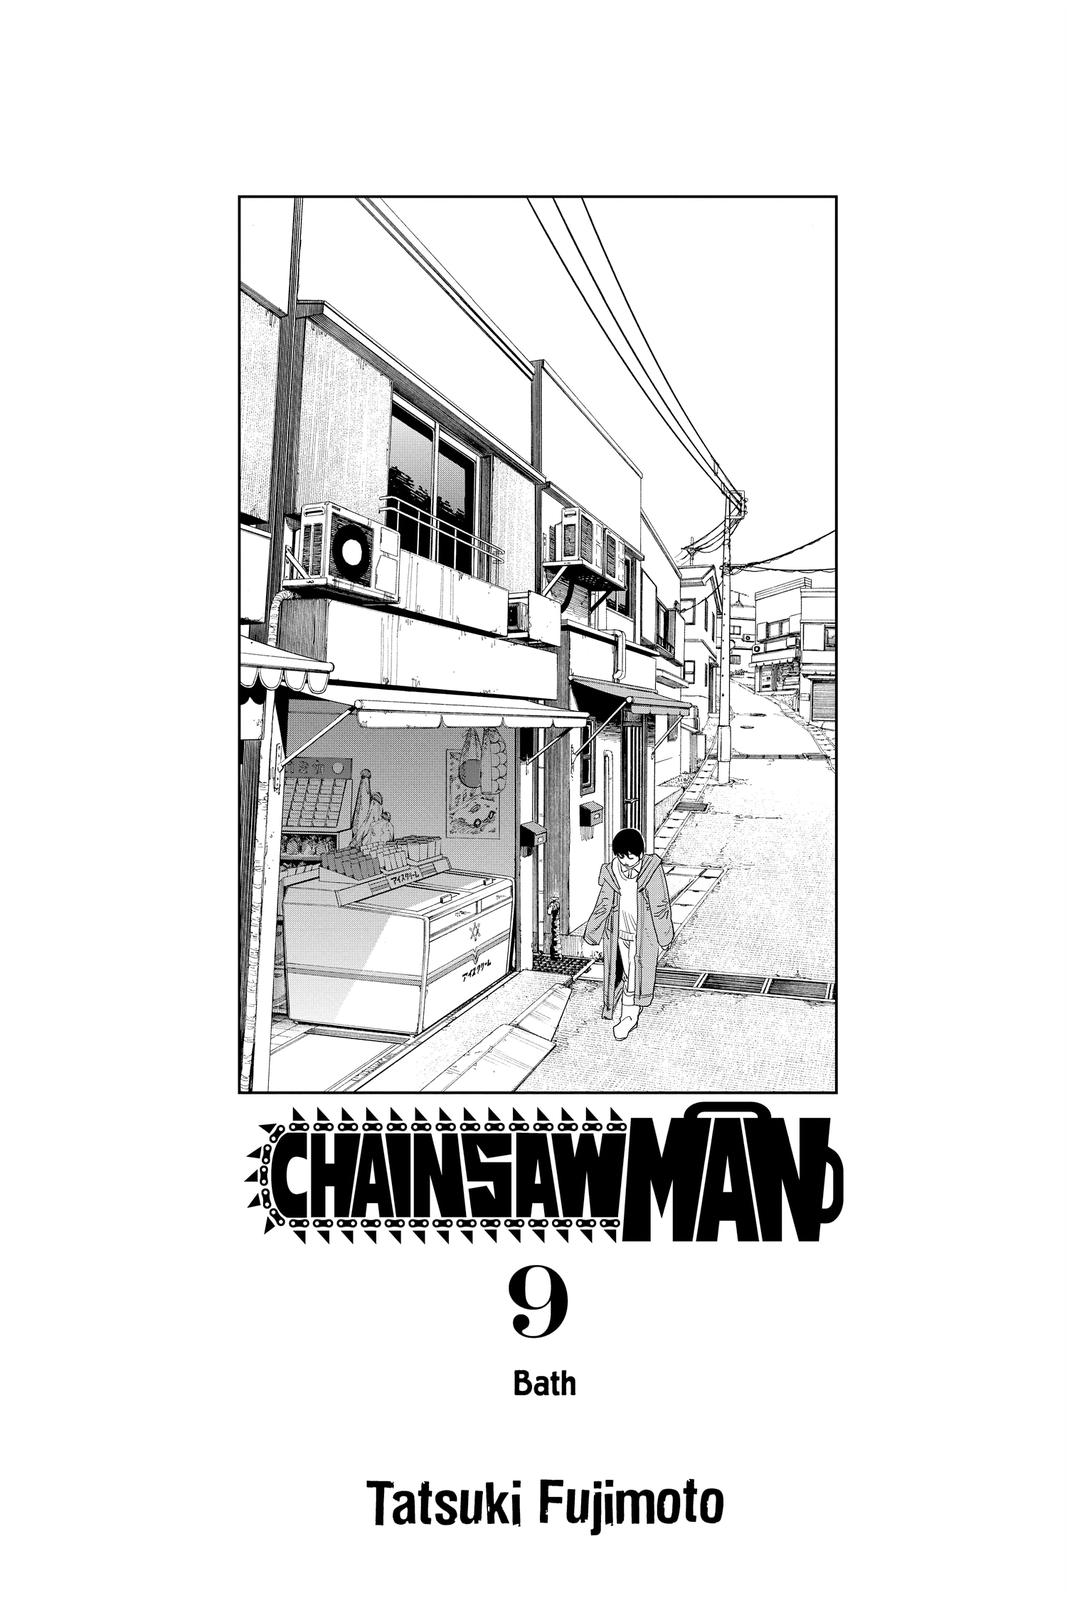 Chainsaw Man series Chapter 71-80 (PDF) - 58.51 MB @ PDF Room